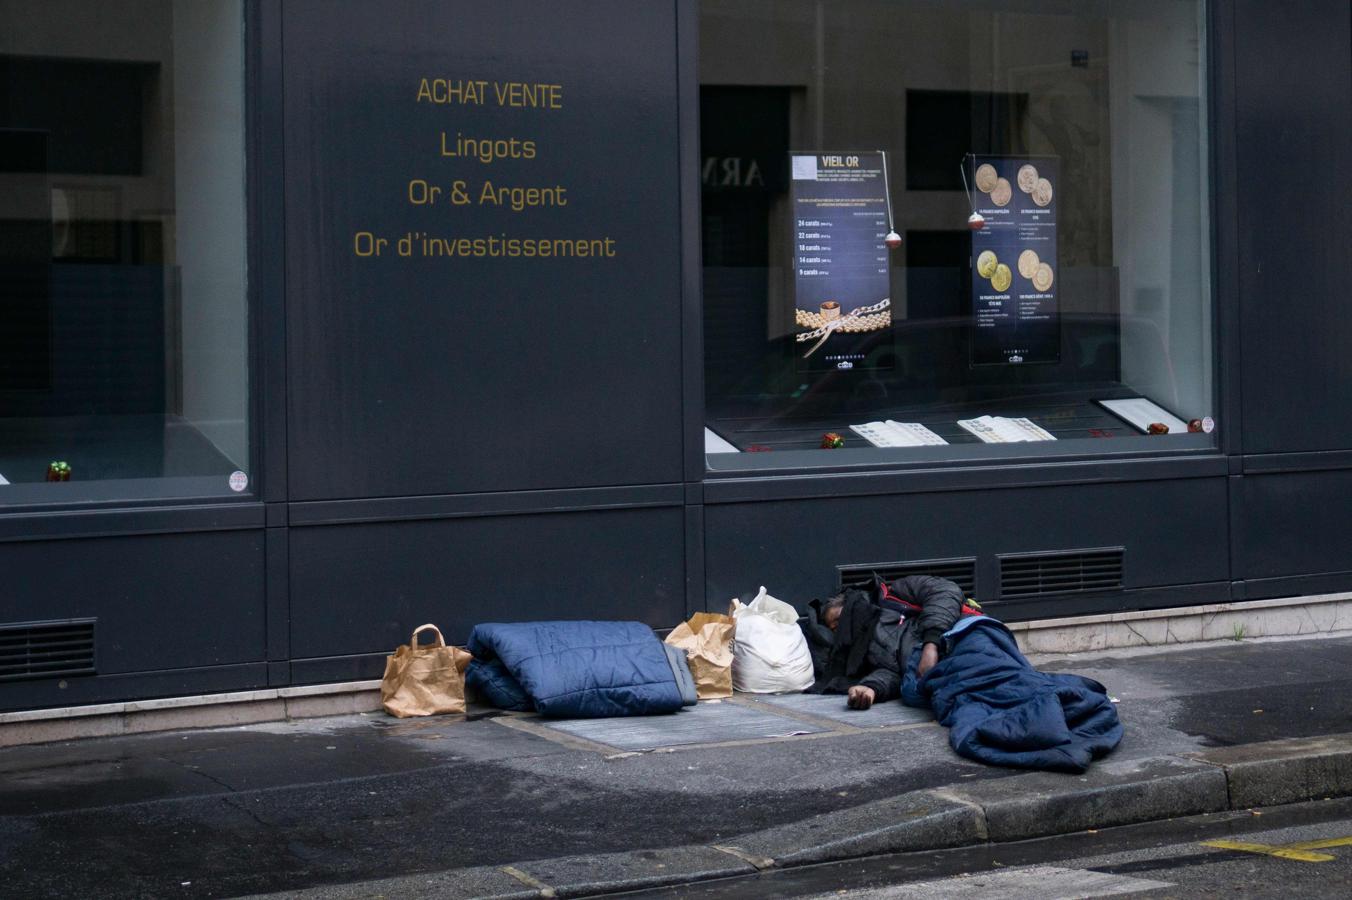 Un hombre sin hogar duerme en una céntrica calle de París a pesar de la ola de frío que recorre Europa